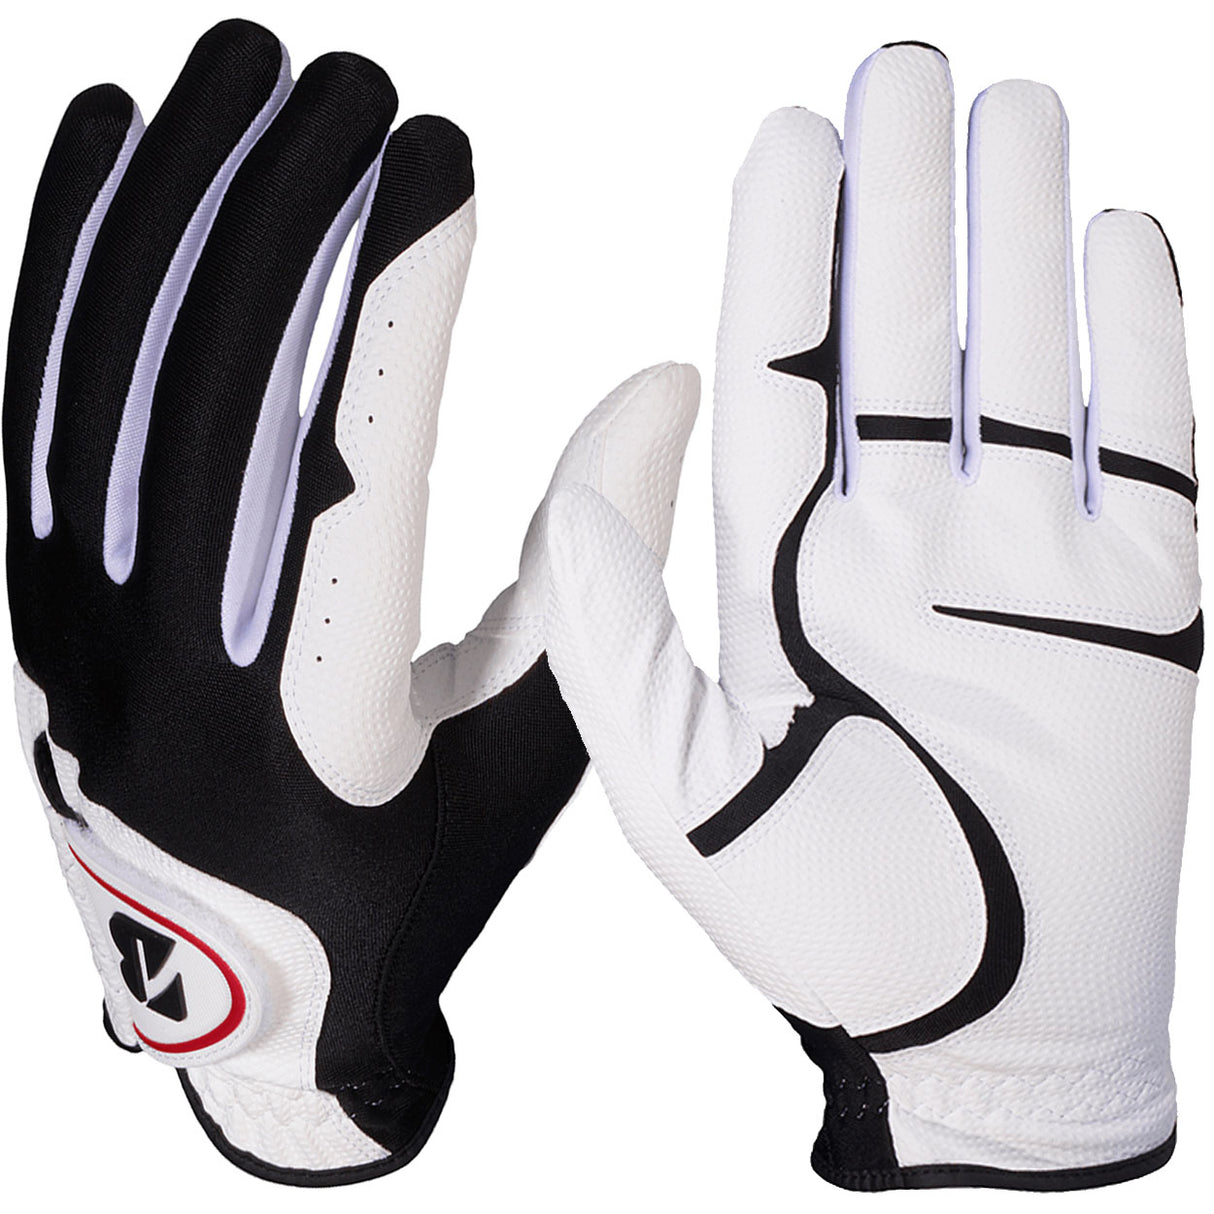 Bridgestone EZ Fit White Golf Gloves (3-Pack)